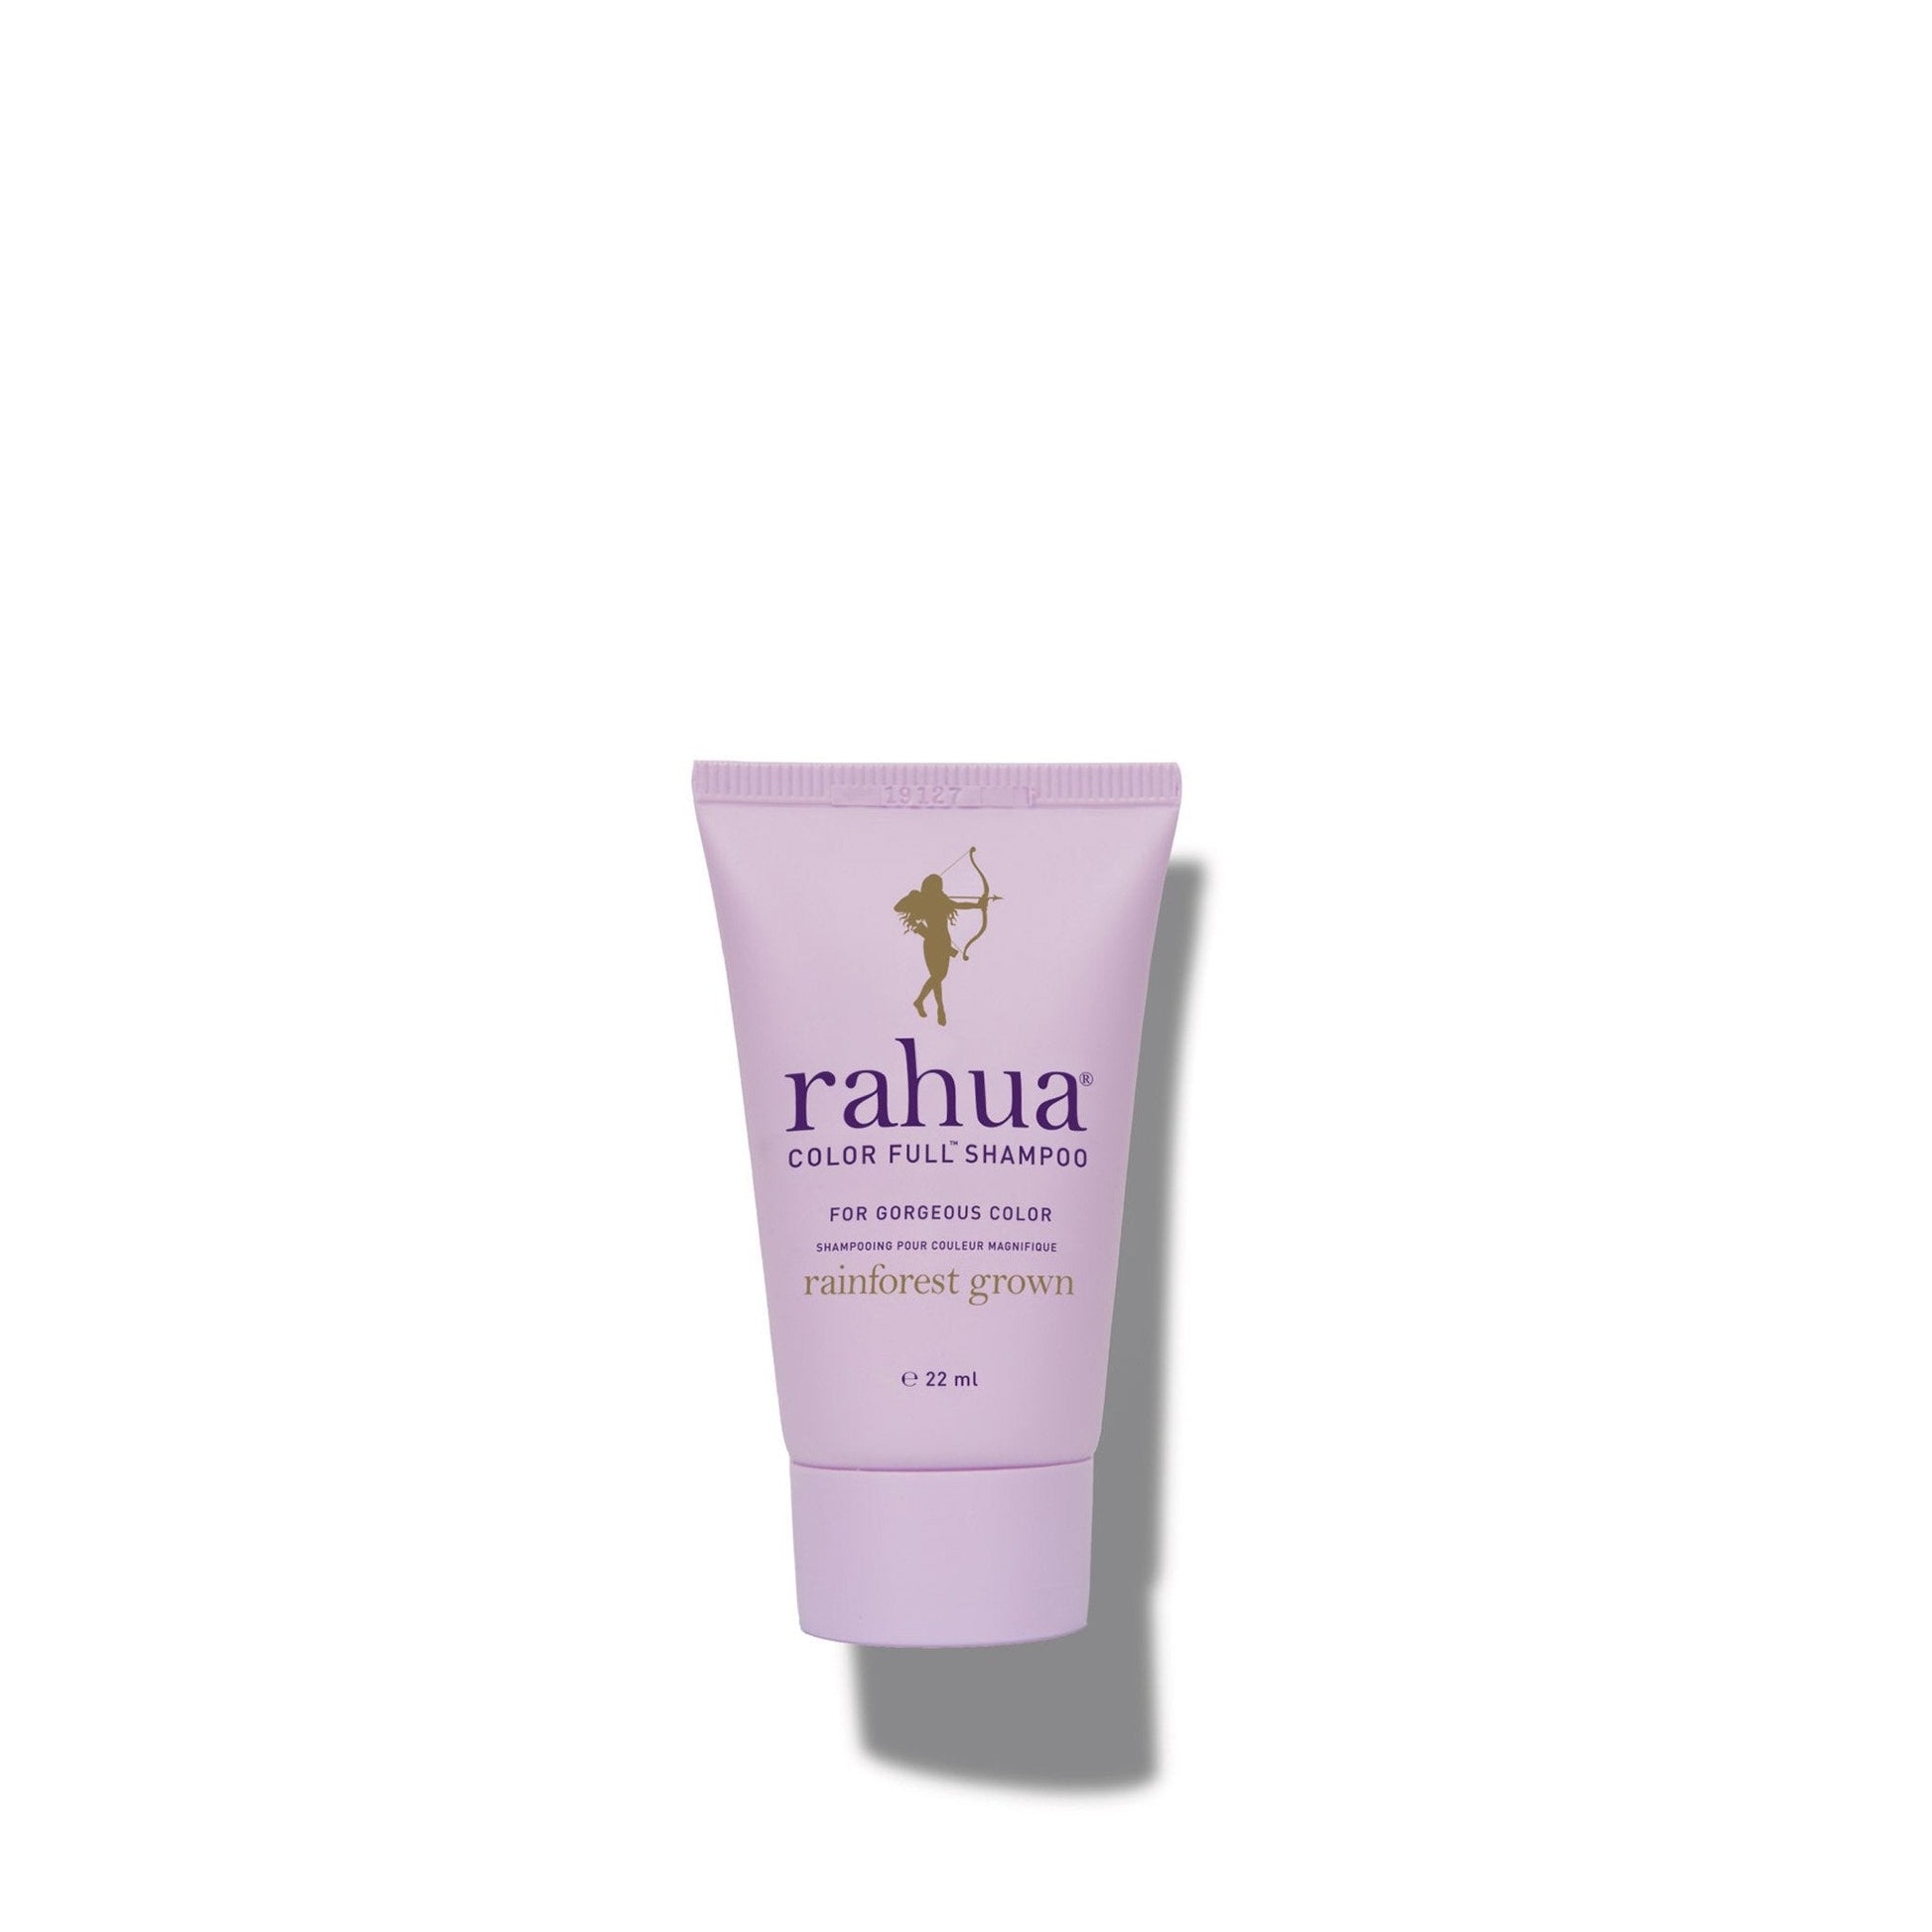 rahua color full shampoo mini travel size